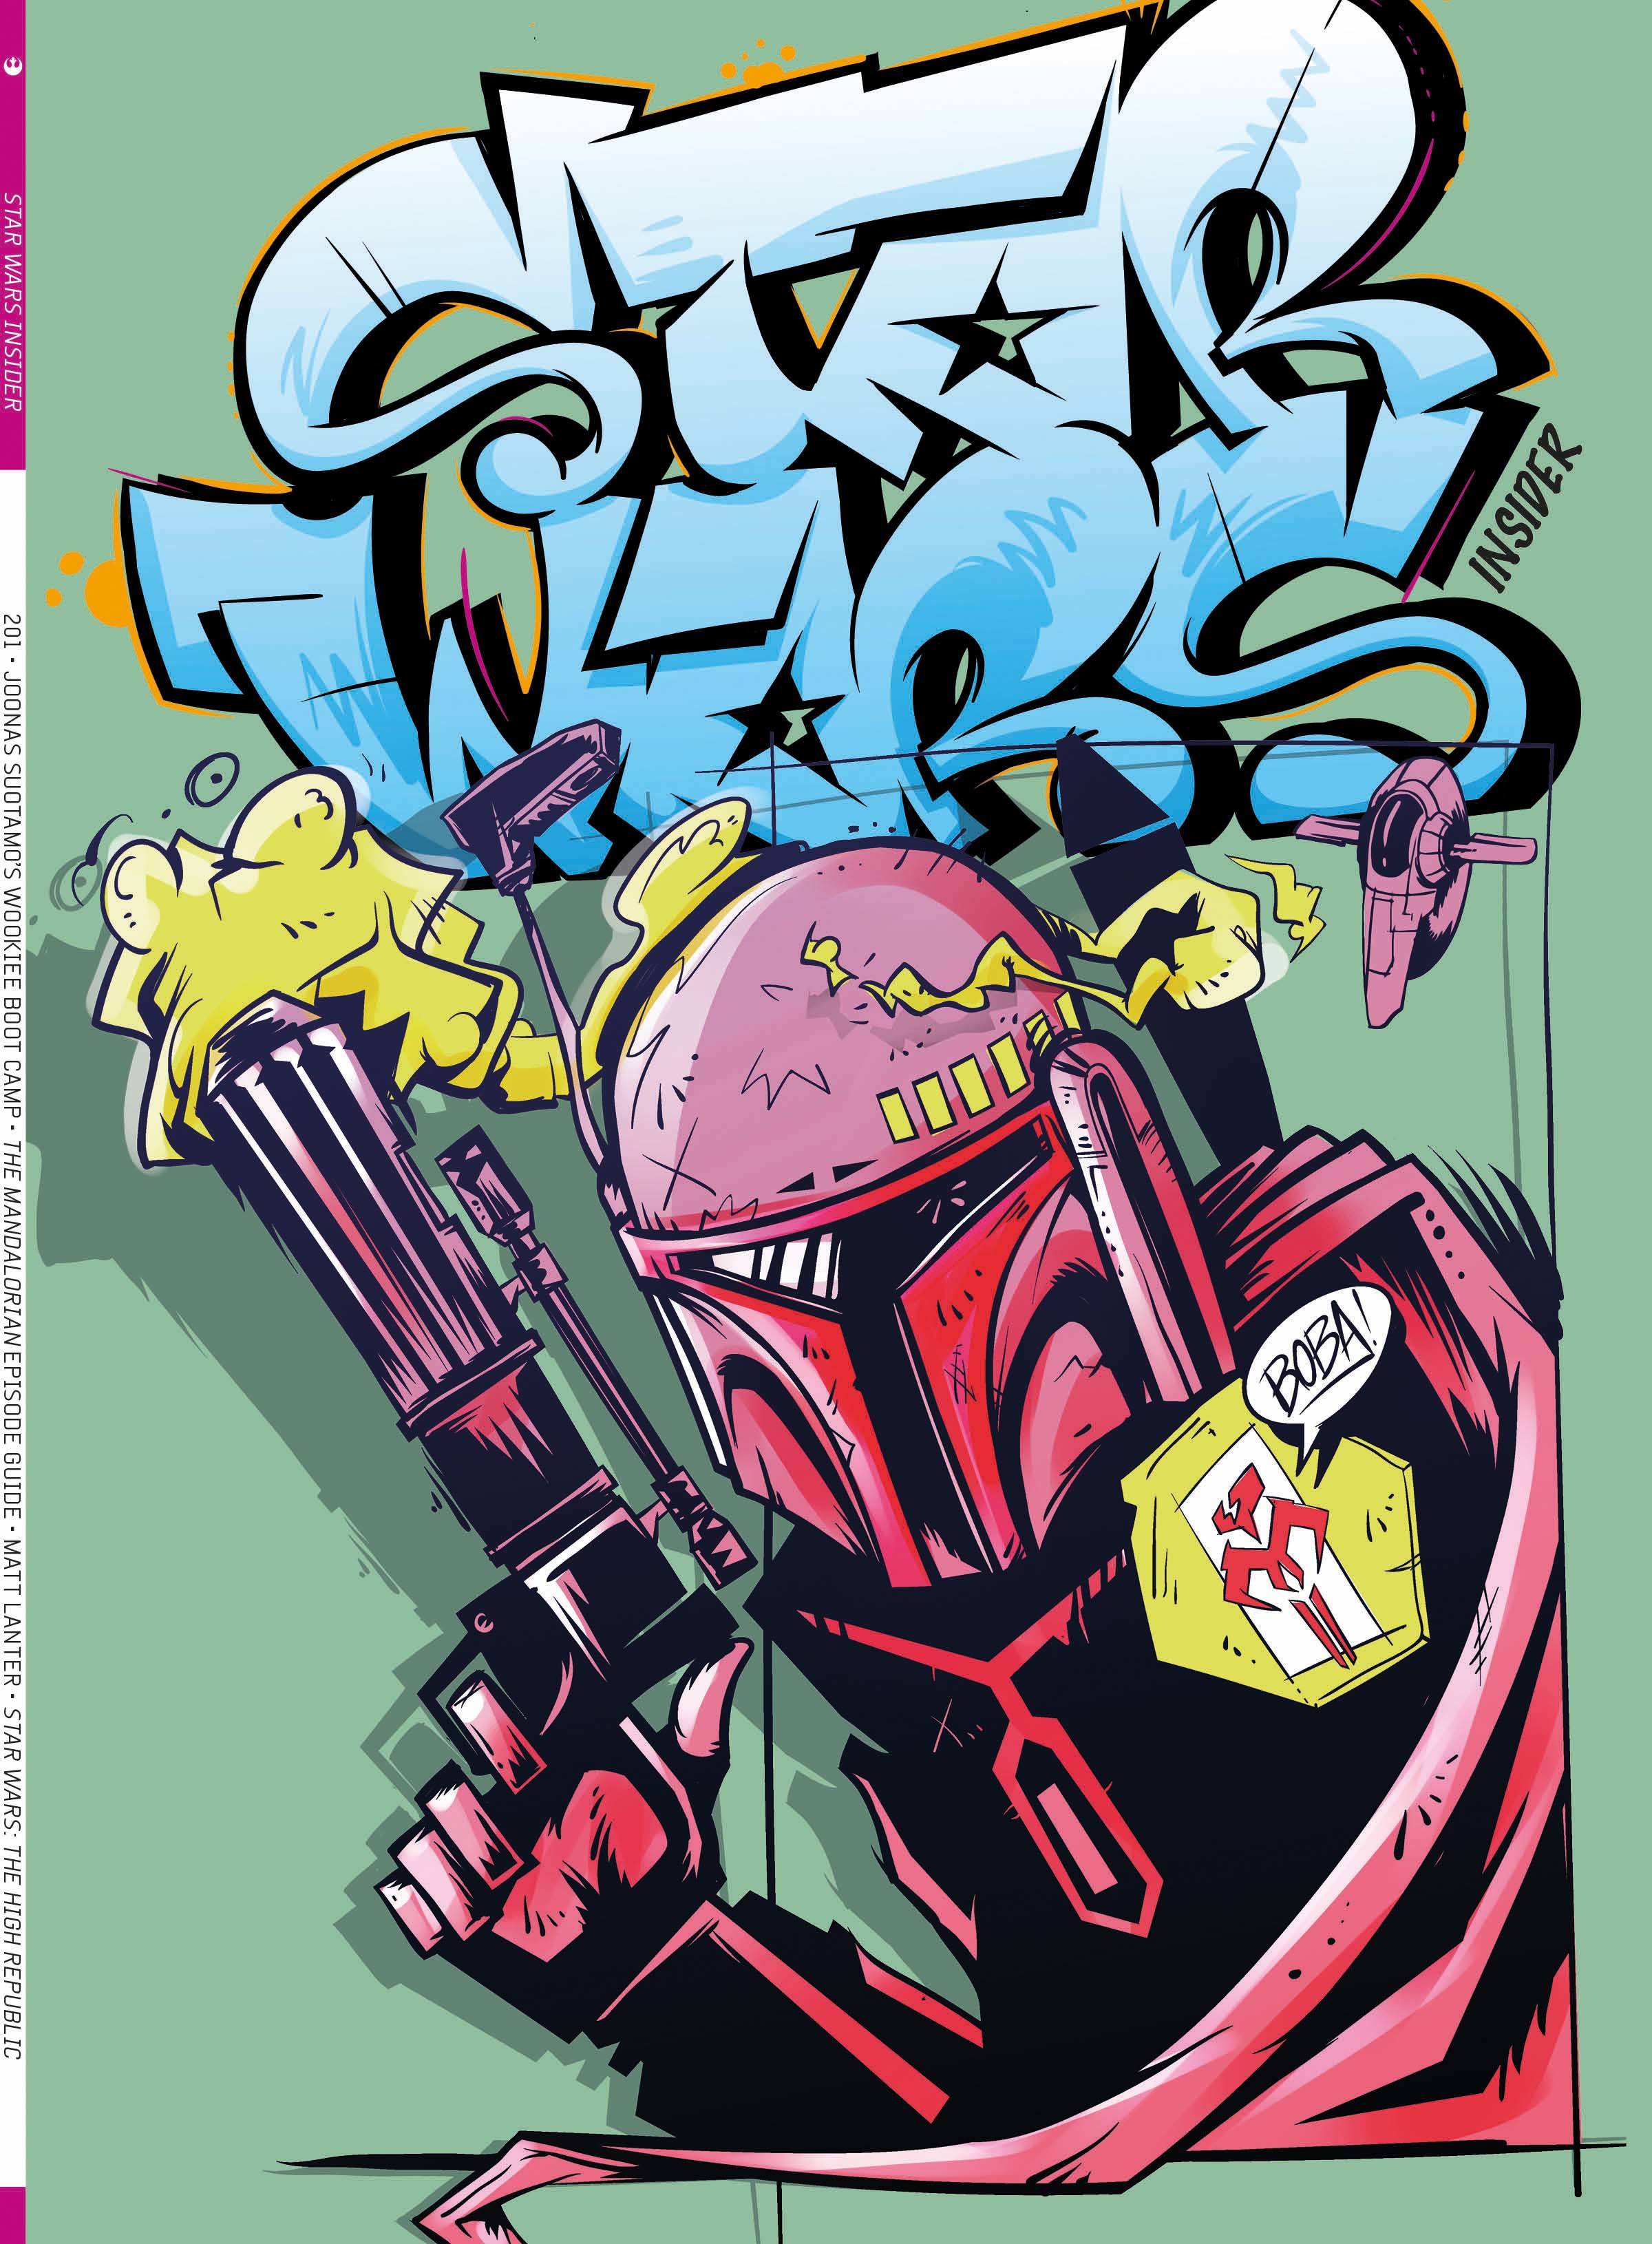 STAR WARS INSIDER #201 PX EDITION 03/31/21